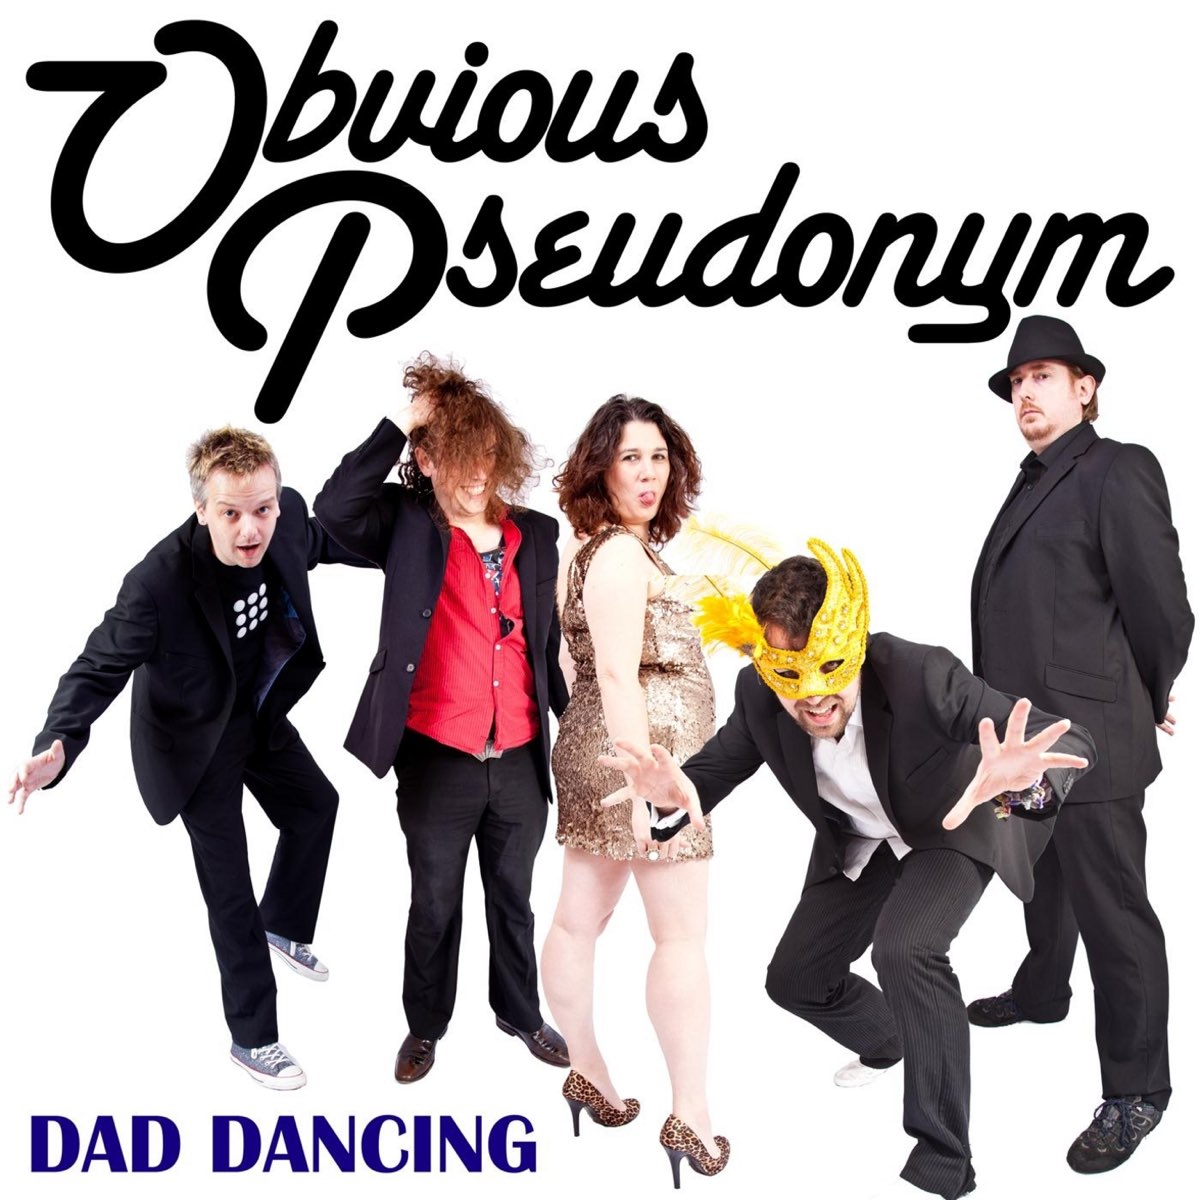 Daddy dance. Pseudonym.